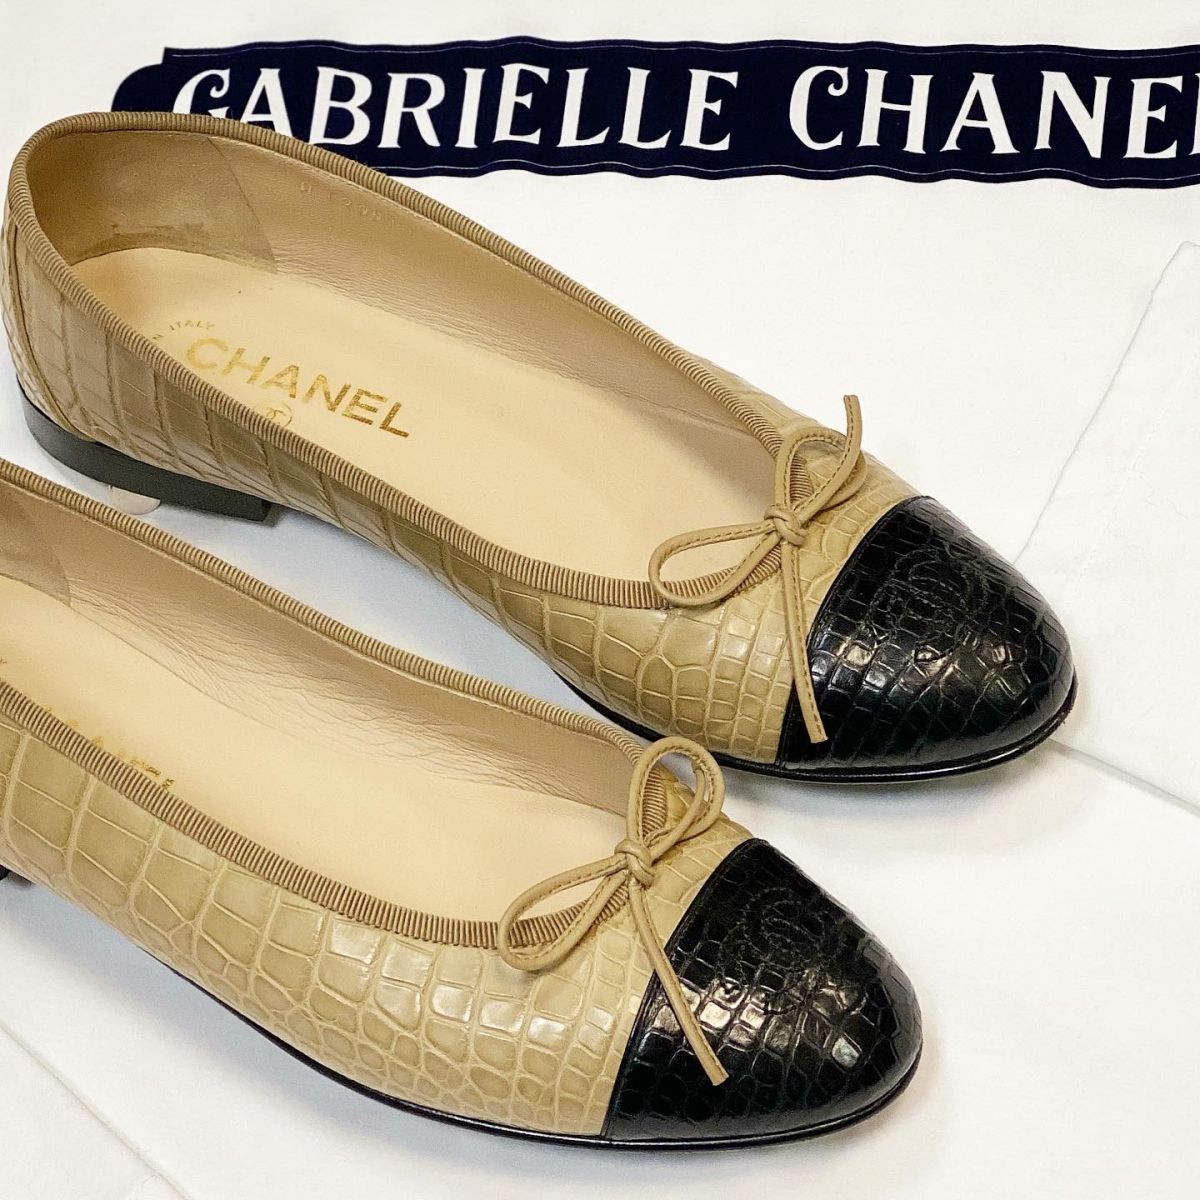 Балетки / крокодил / Chanel размер 38.5 цена 61 540 руб 